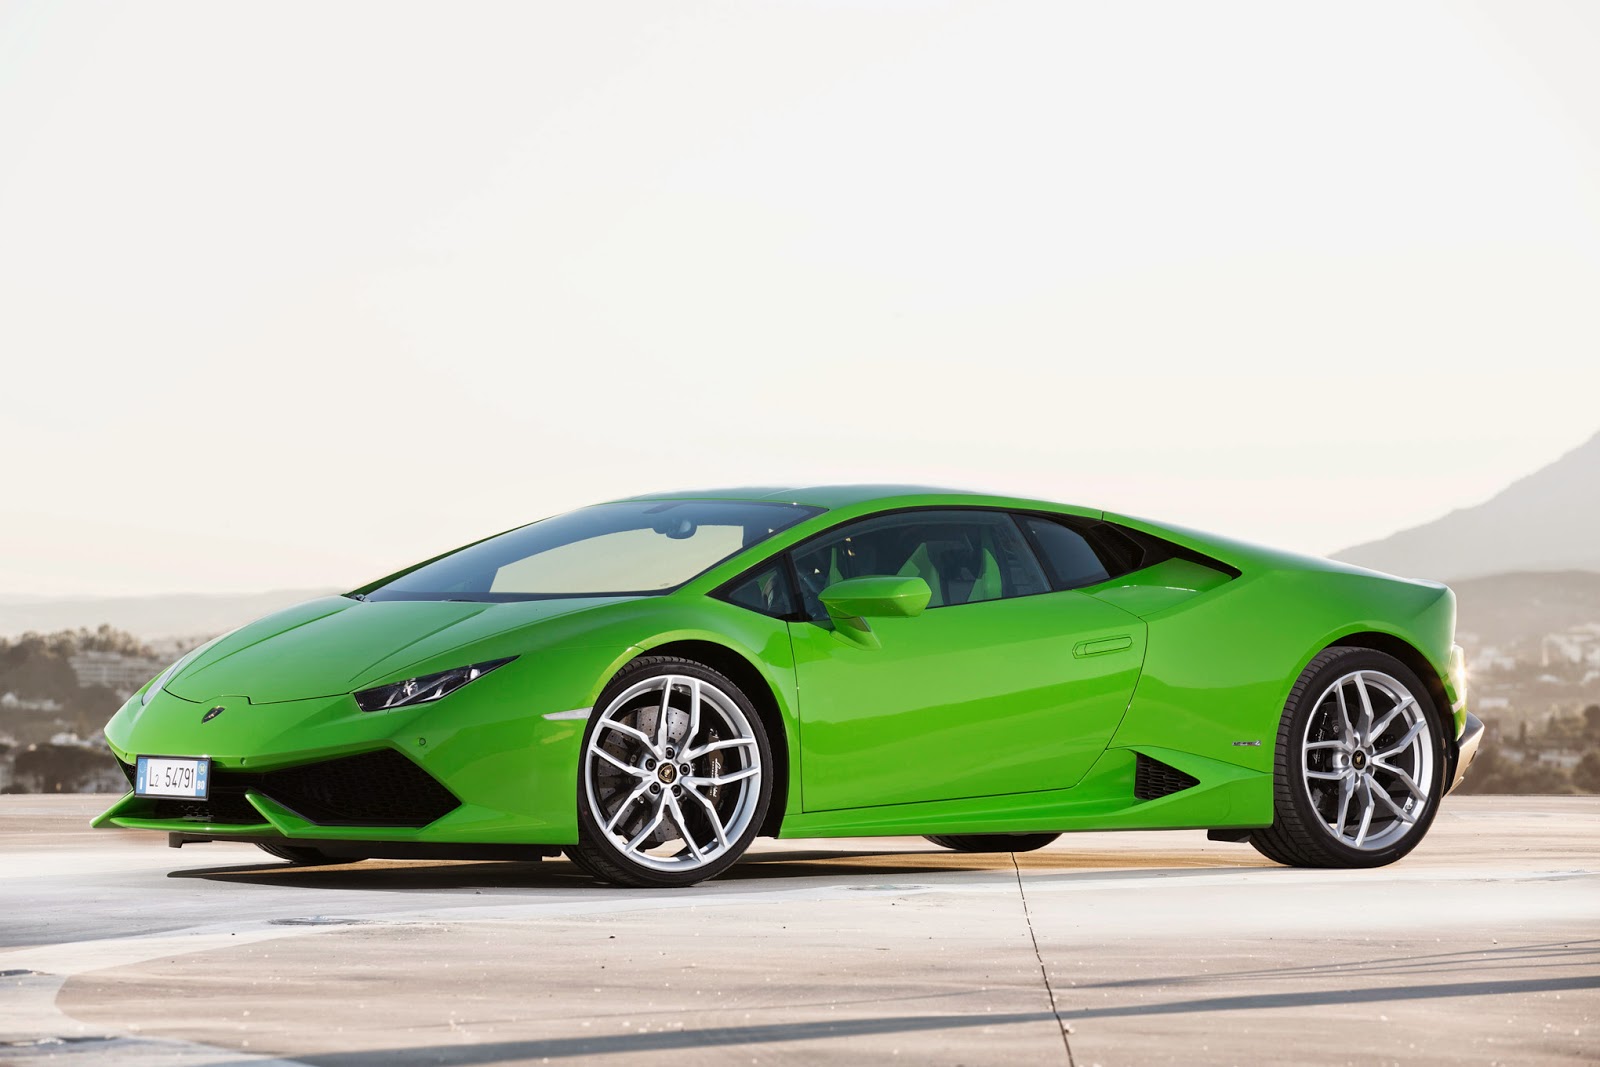 2015 Lamborghini Huracan Price, Release Date and Specs